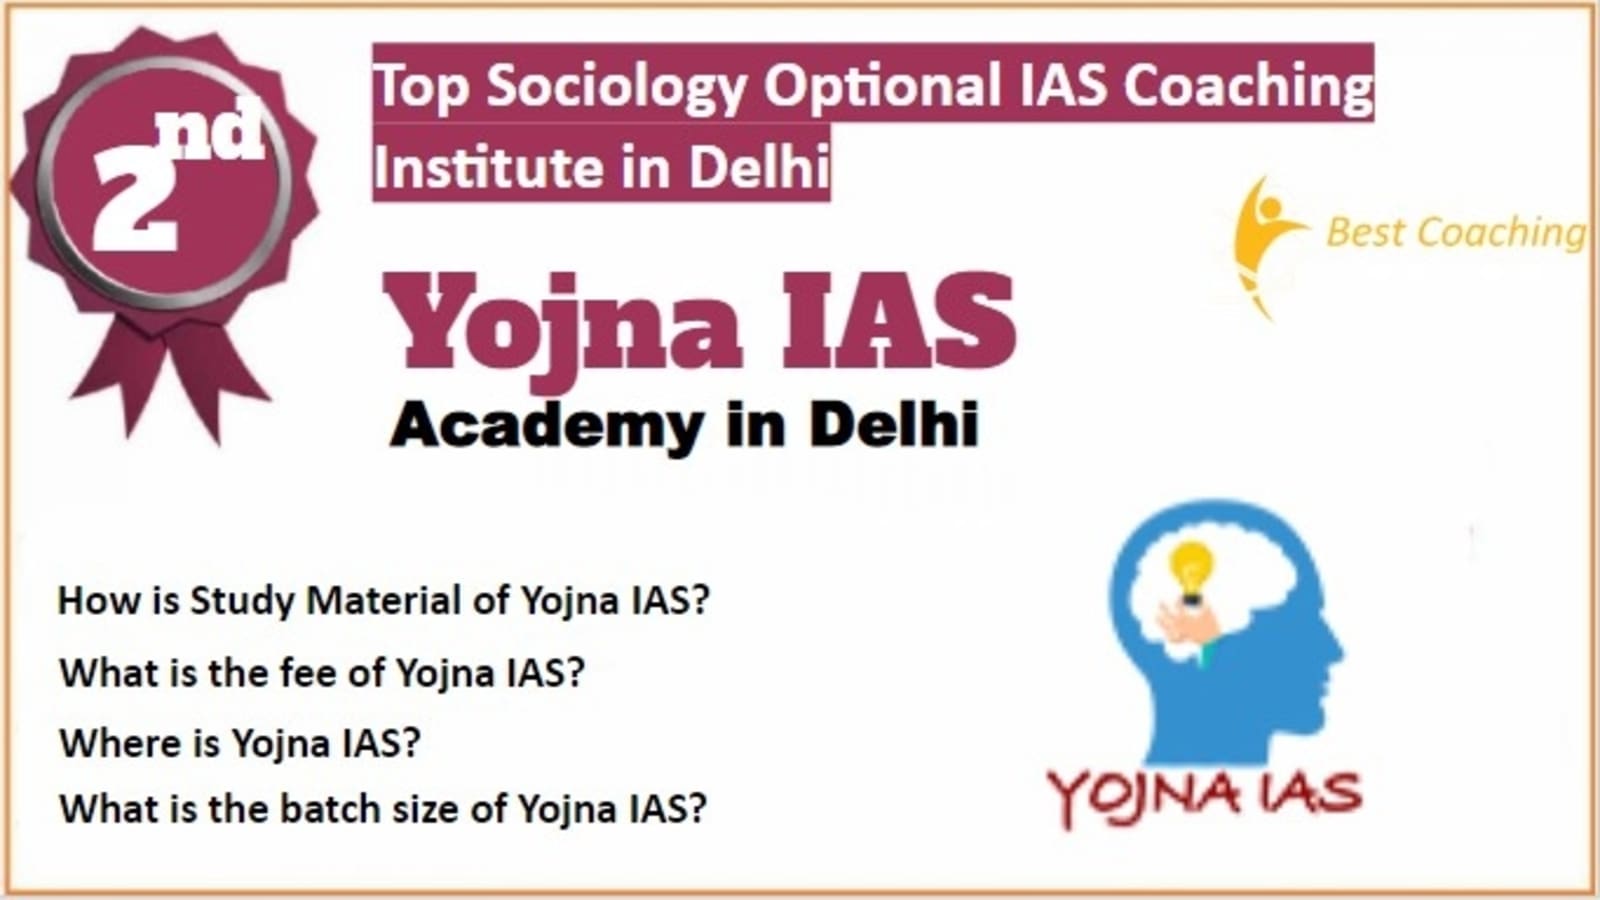 Rank 2 Best Sociology Optional IAS Coaching in Delhi